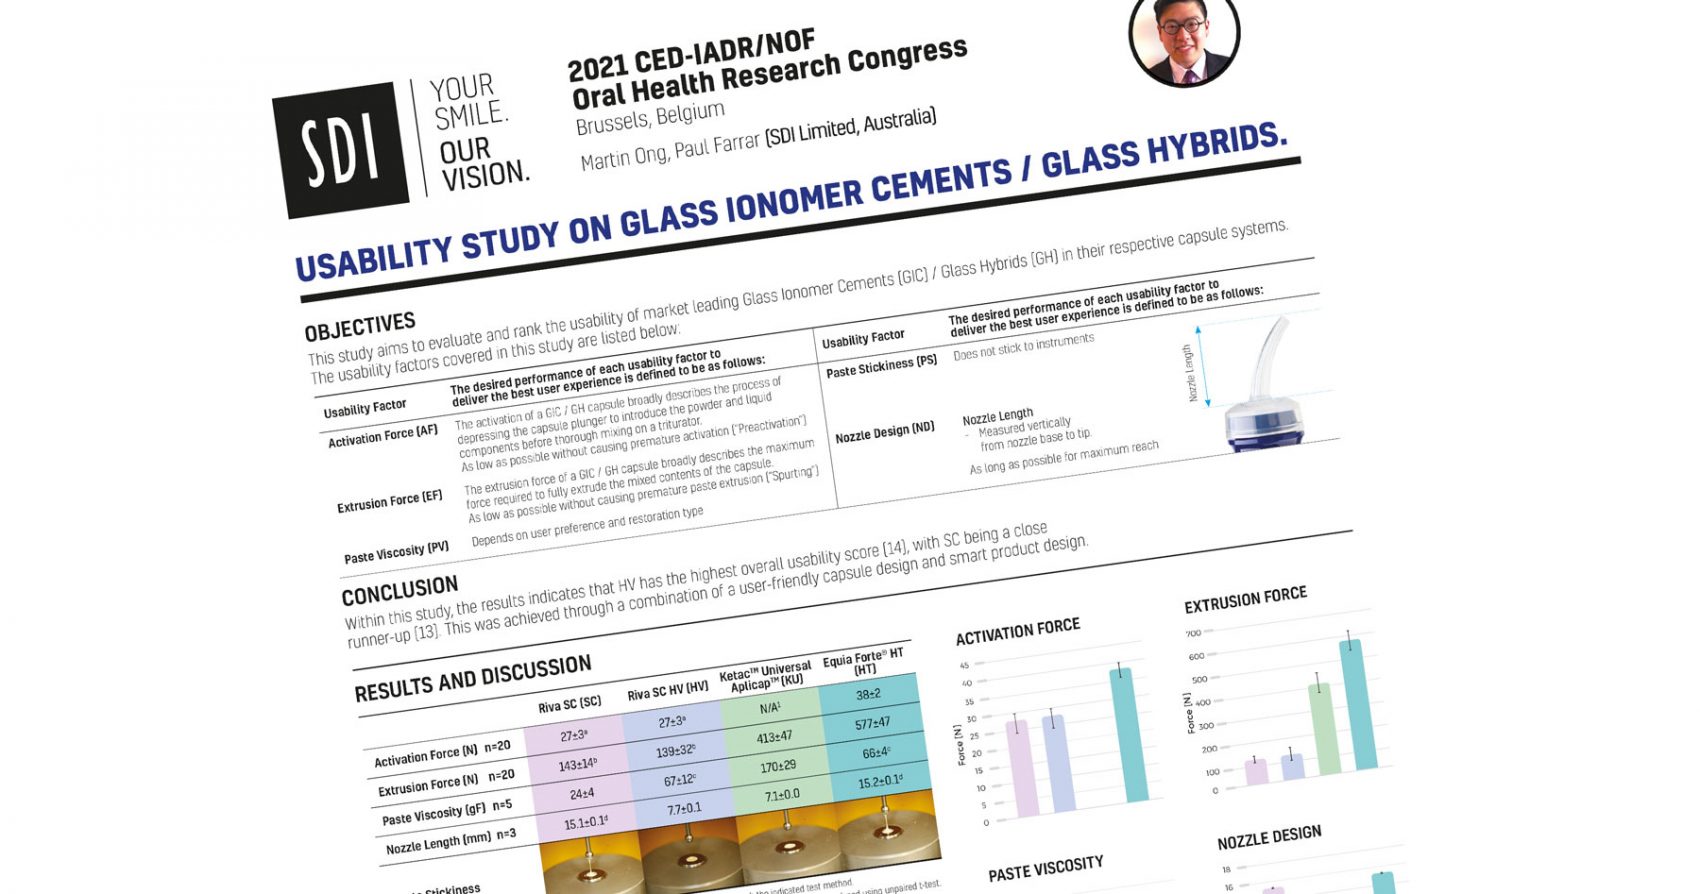 Usability Study on Glass Ionomer Cements / Glass Hybrids